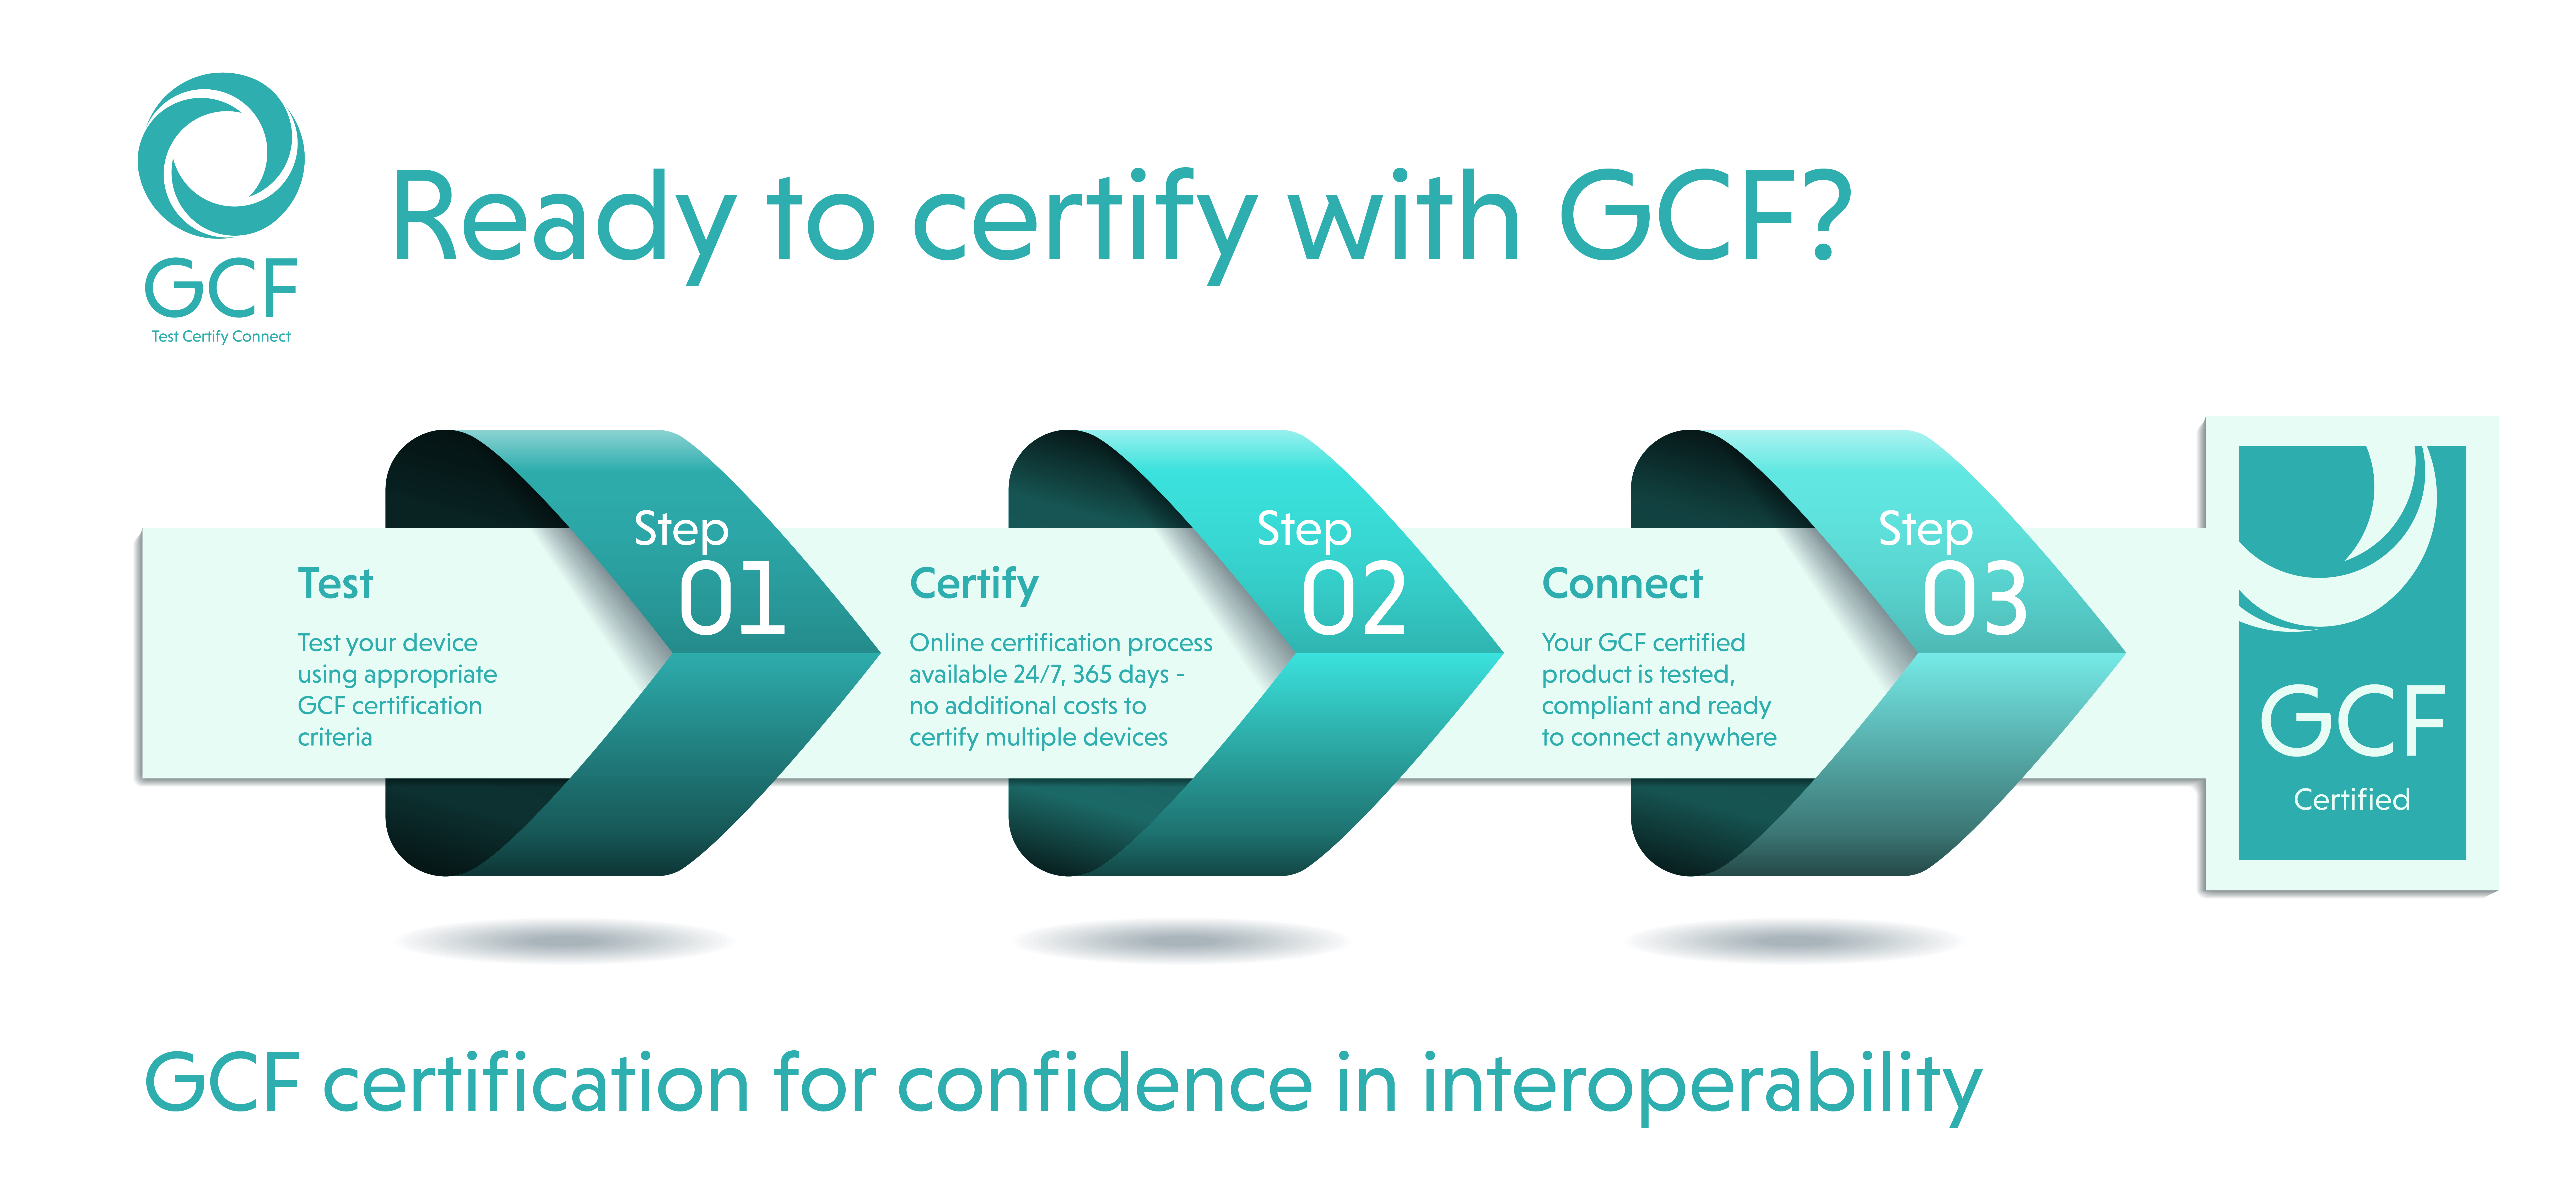 GCF Certification Infographic FINAL hi-res.jpg 2